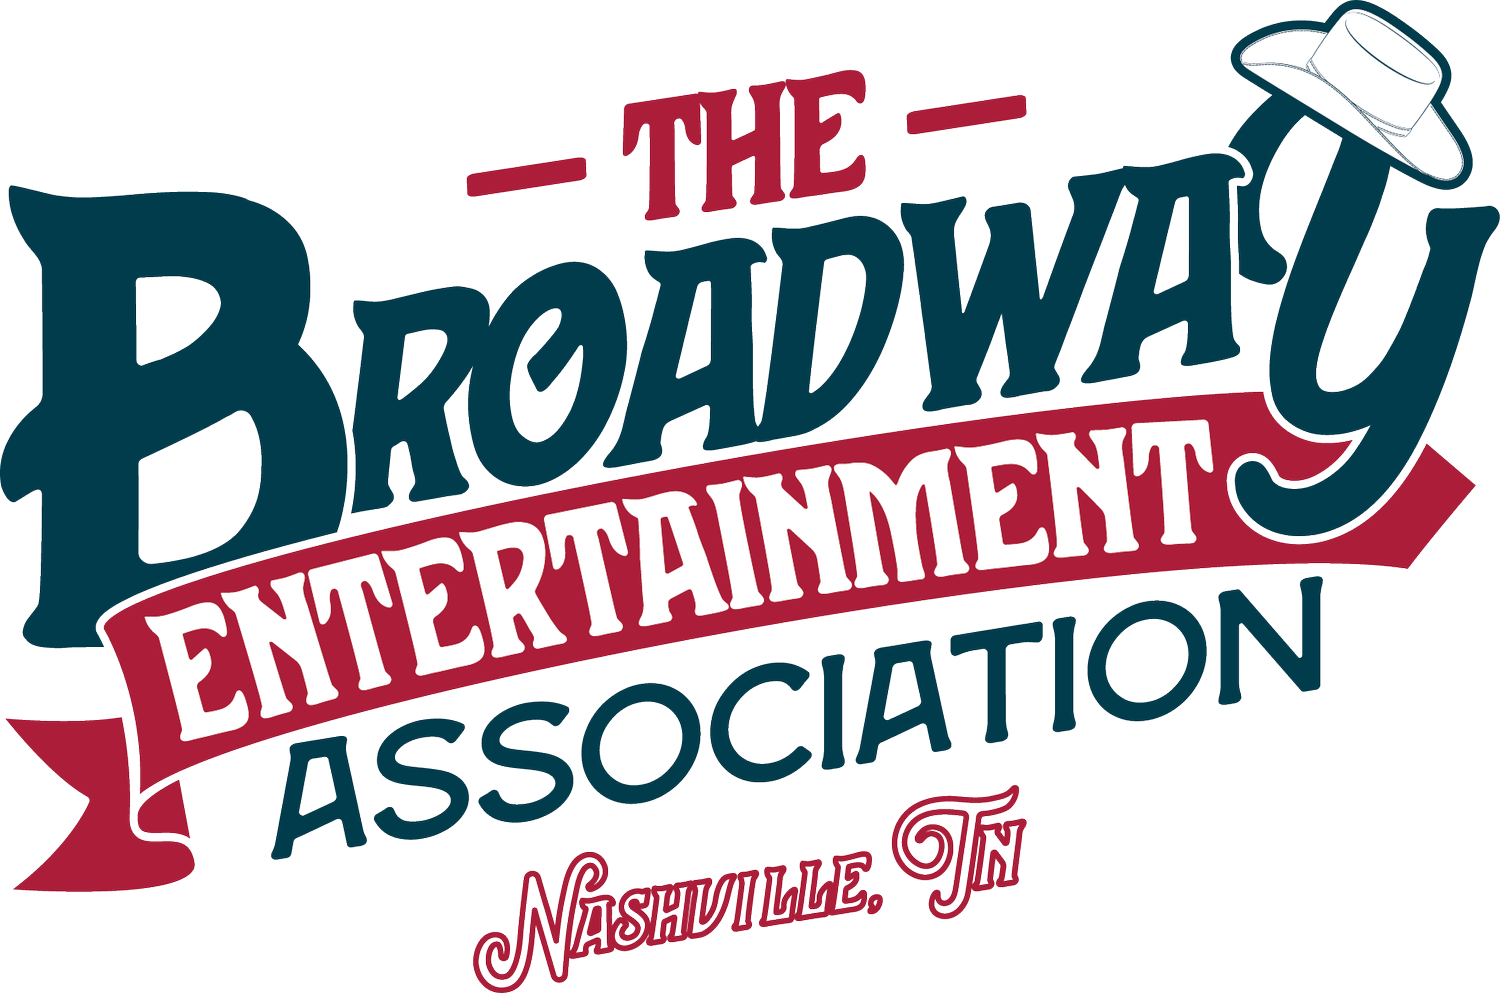 Broadway Entertainment Association